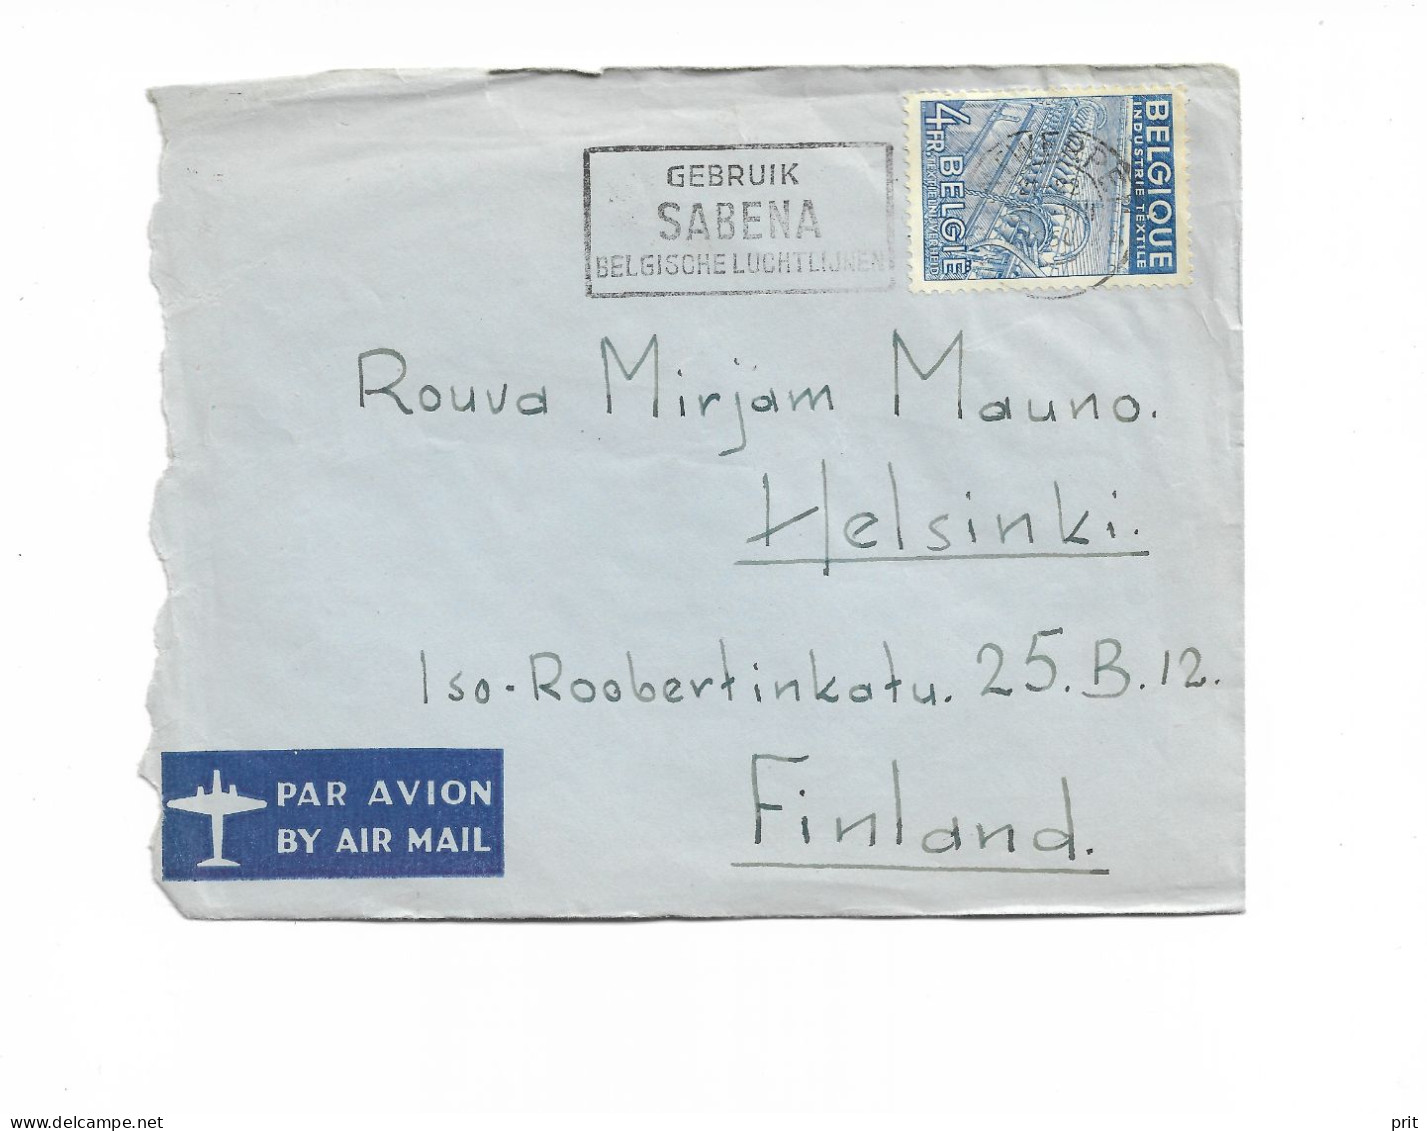 Antwerpen Belgium Airmail Cover To Helsinki Finland 1950 "Gebruik Sabena Belgische Luchtlijnen" Slogan Cancel - Briefe U. Dokumente